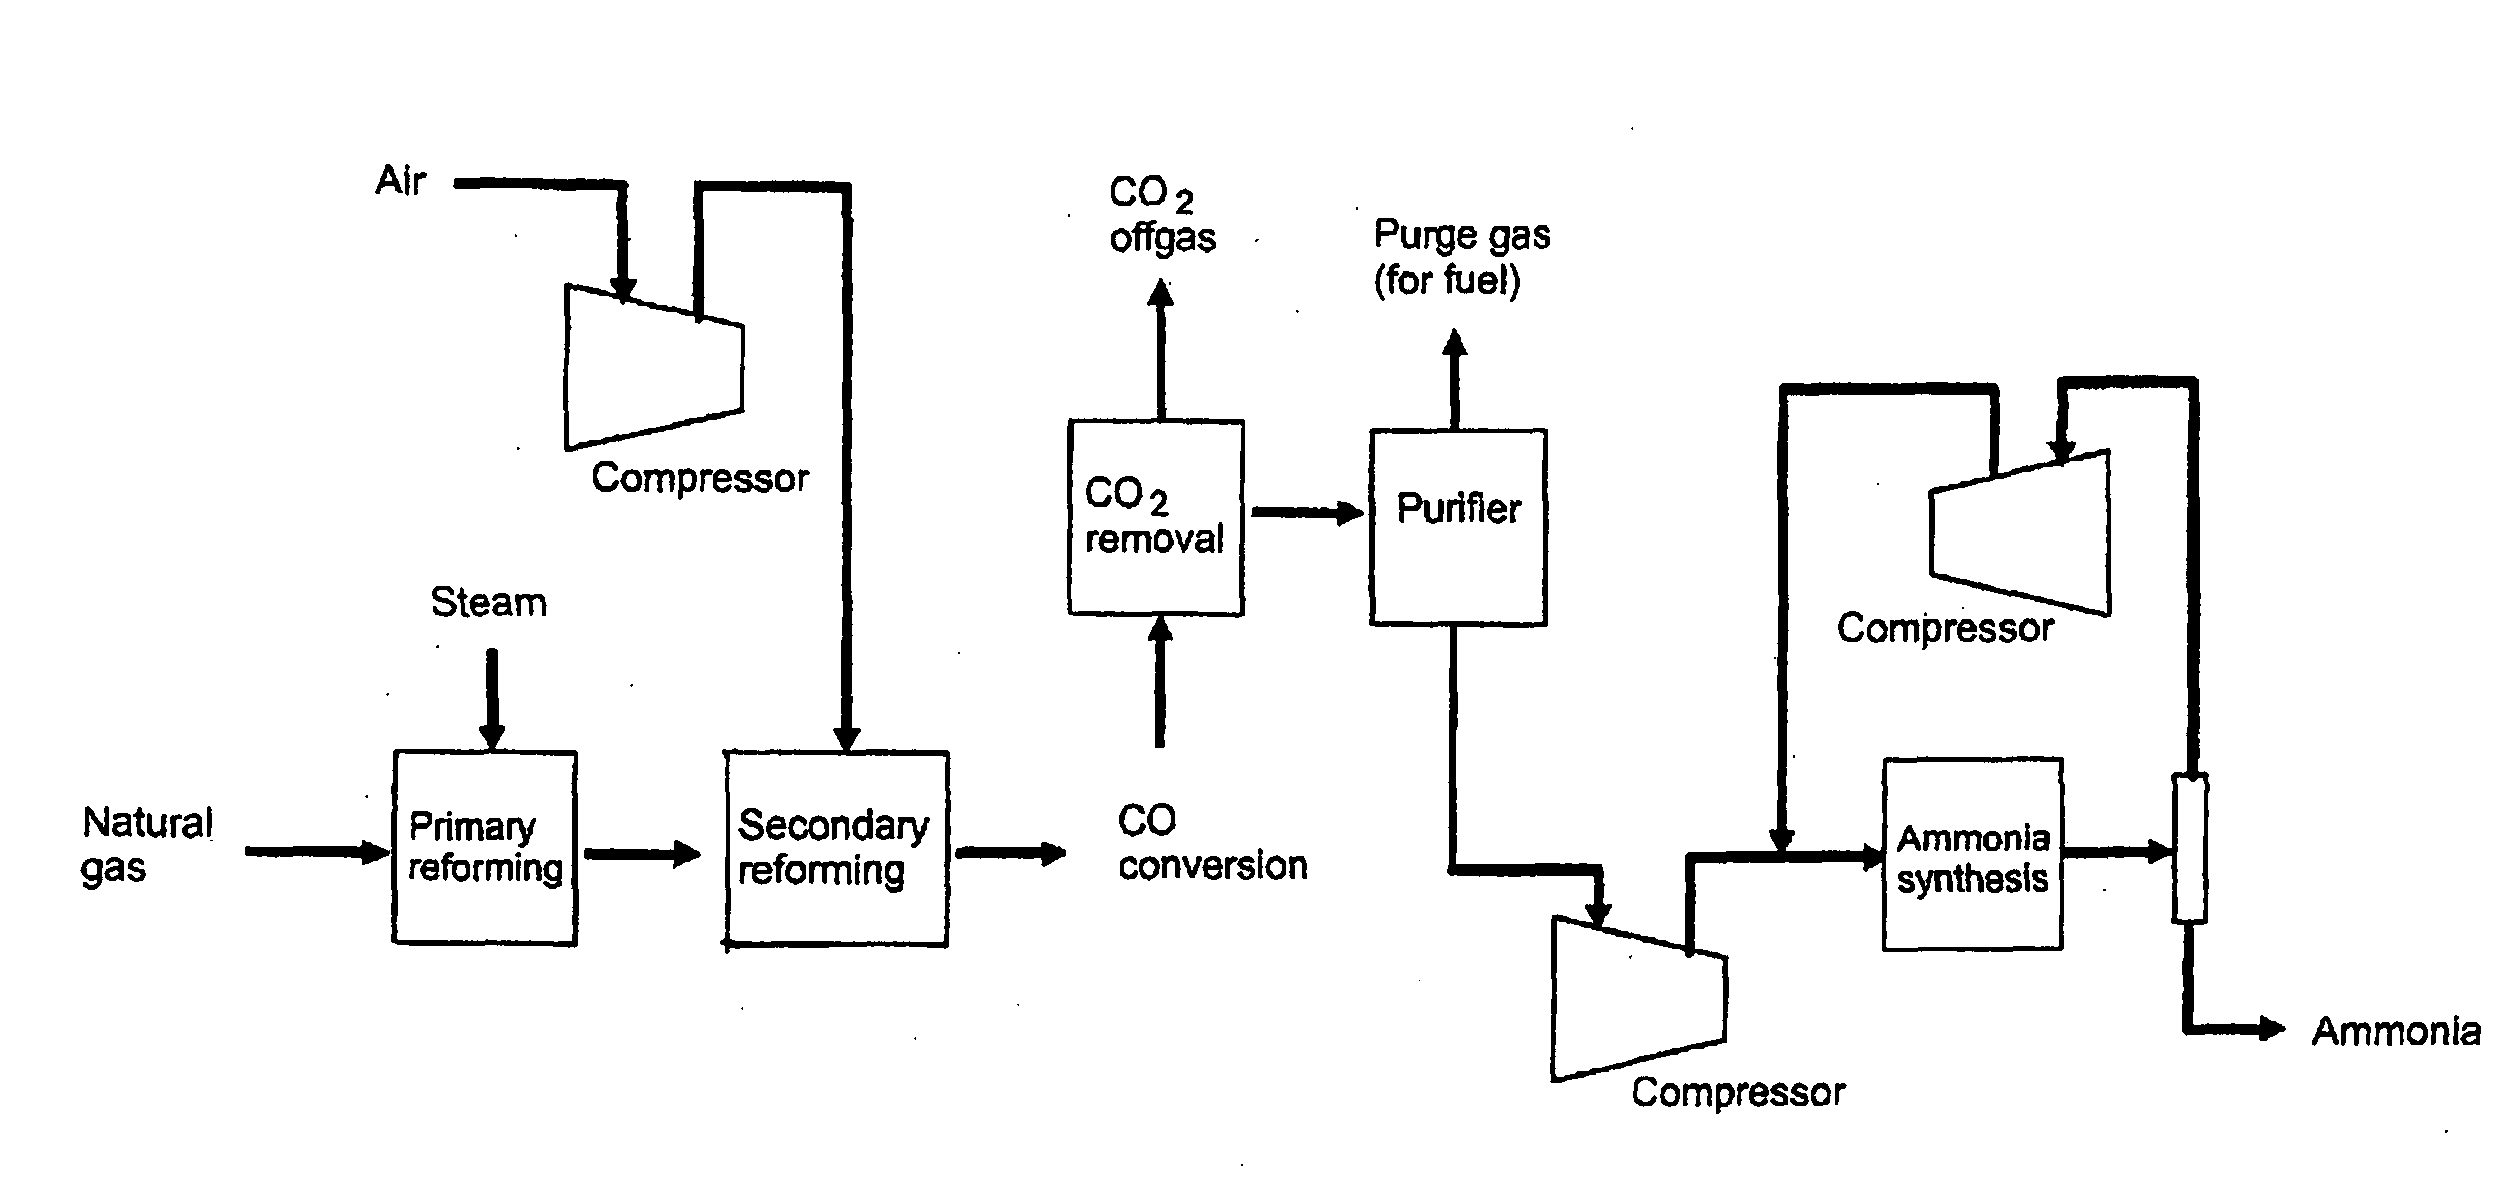 Method of coproducing methanol and ammonia